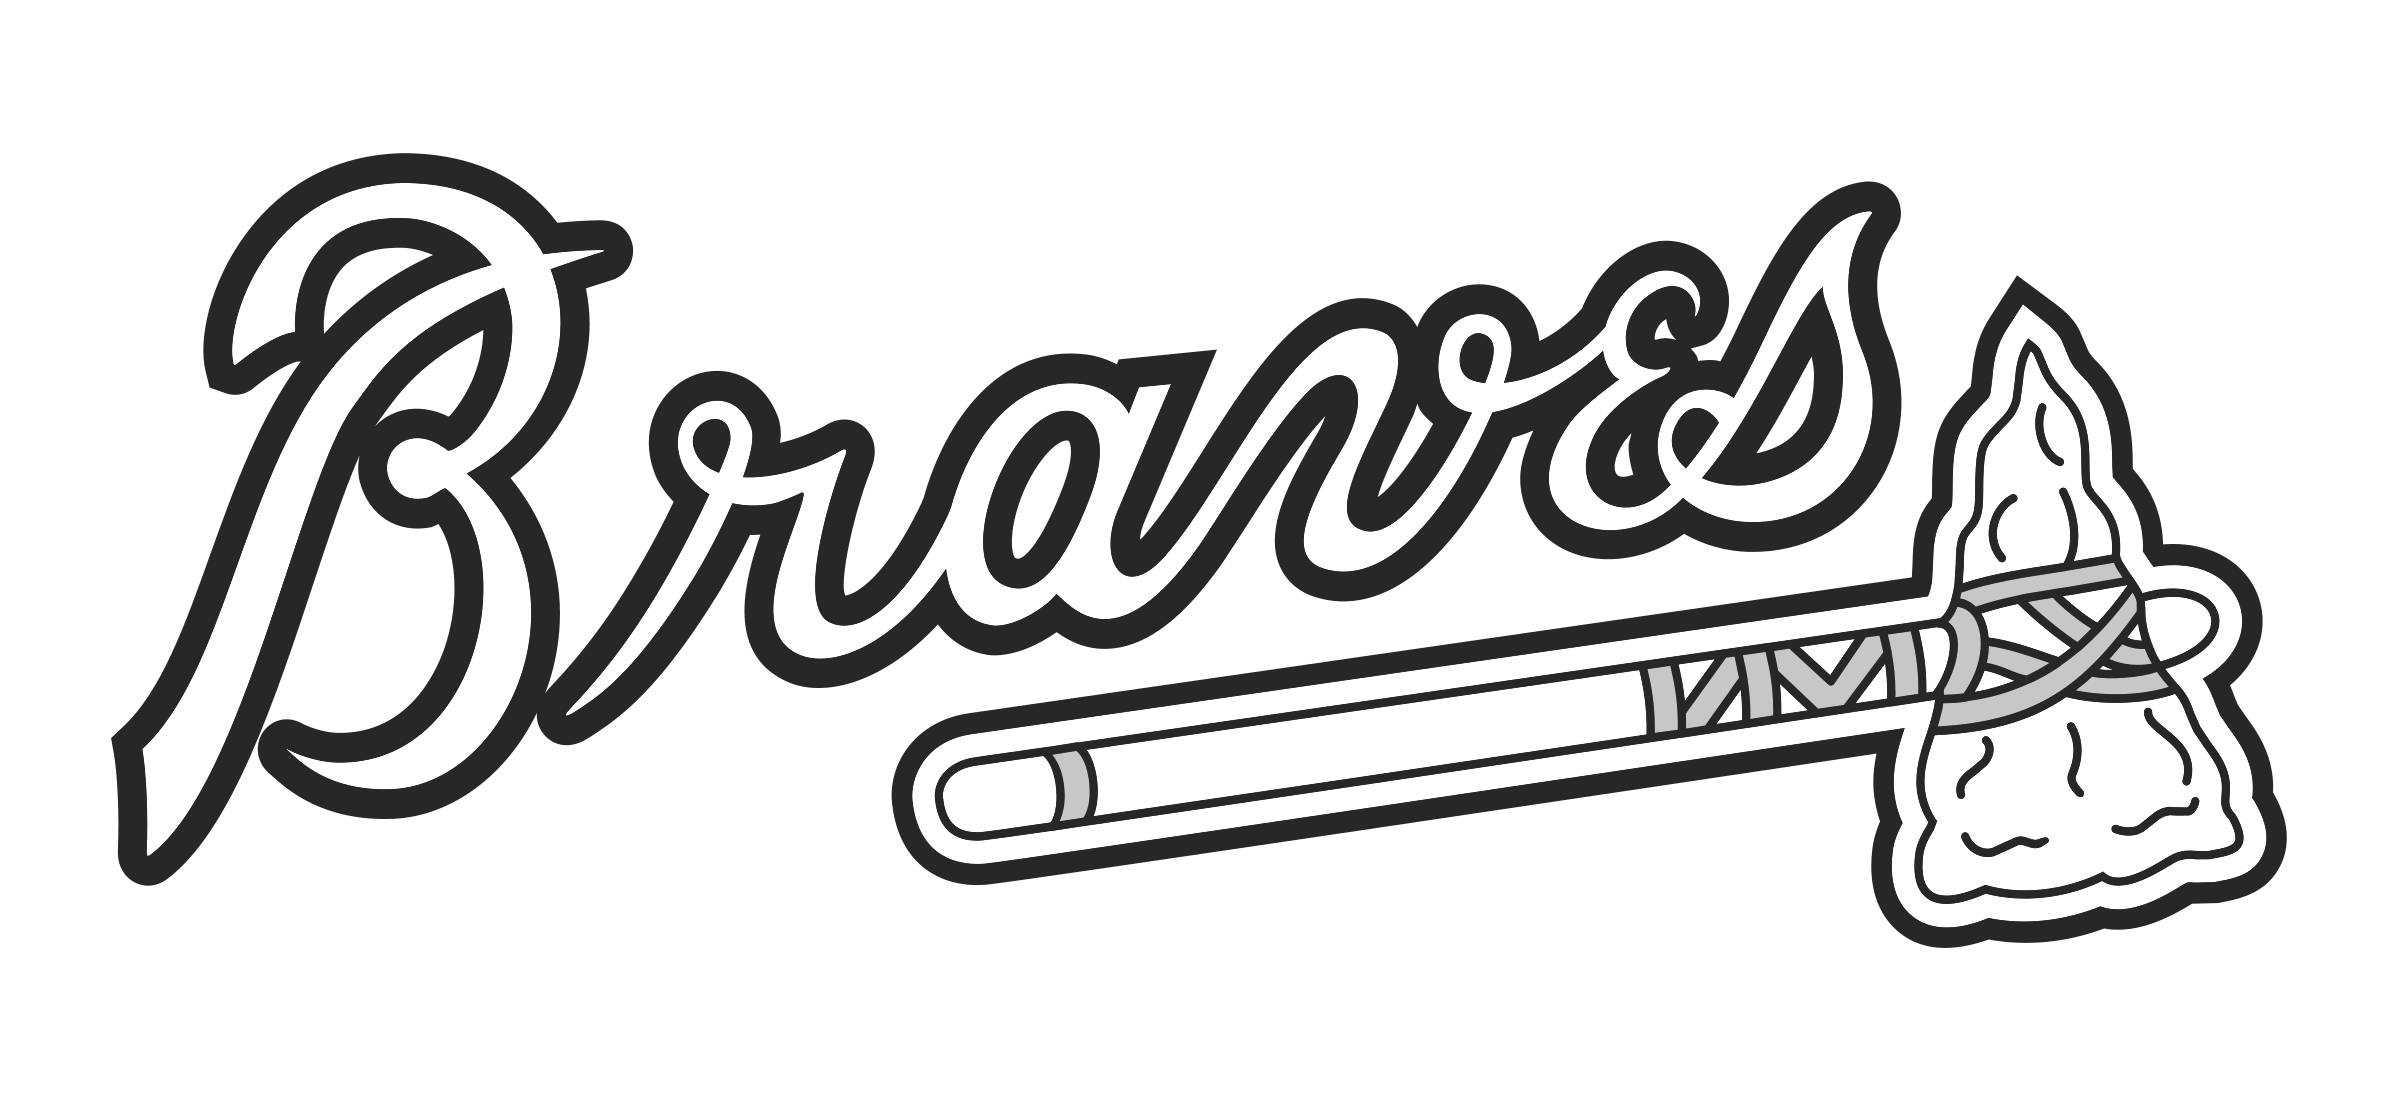 Atlanta Braves Logo Black And White - Atlanta Braves, Transparent background PNG HD thumbnail